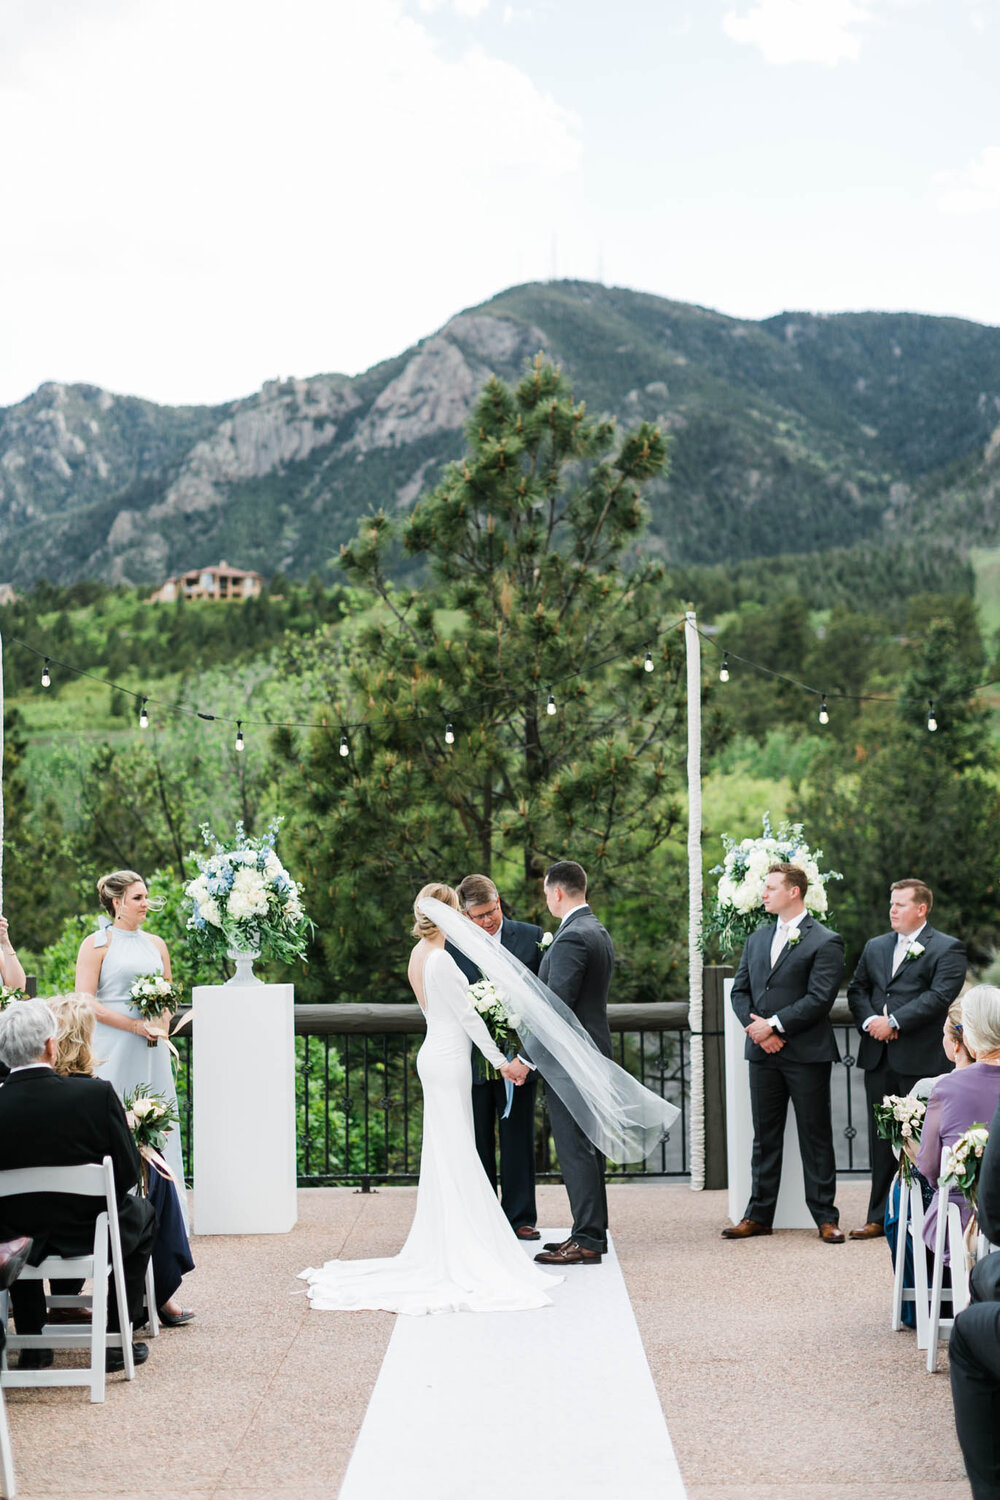 The mountainous backdrop was as breathtaking as their ceremony.